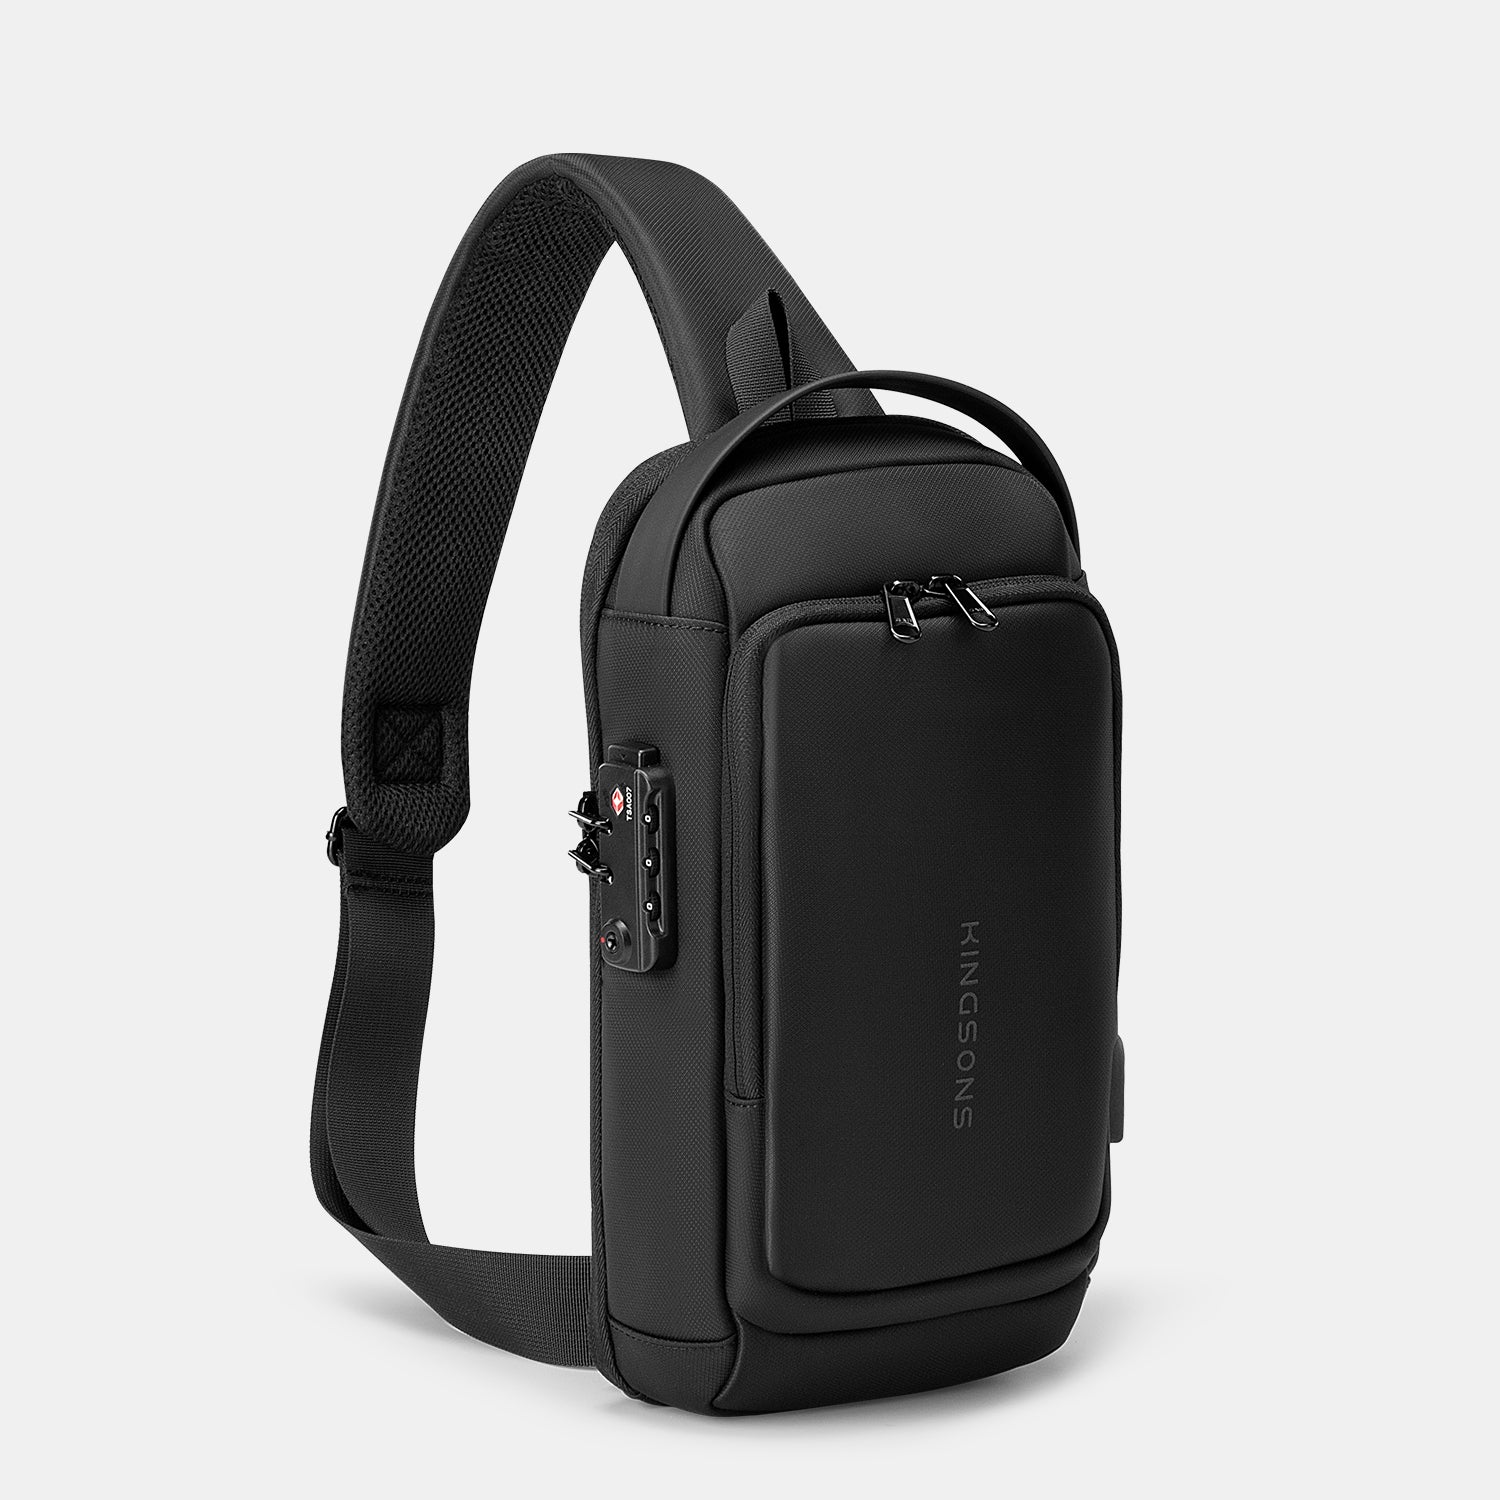 Kingsons Sling Bag For Travel Hiking Daypack With TSA Lock USB Port